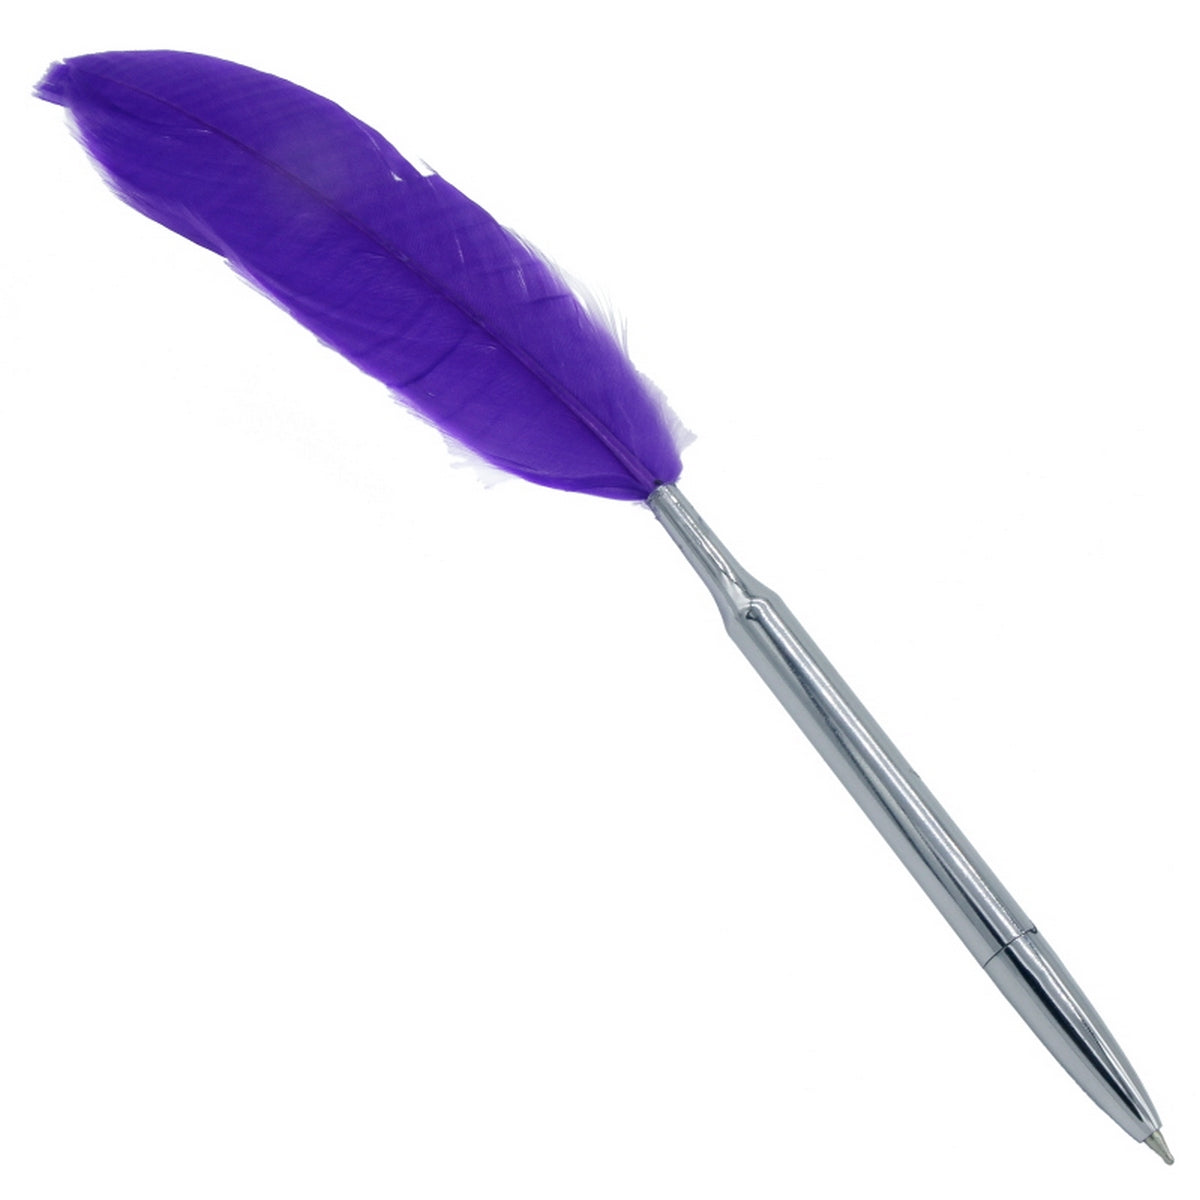 jags-mumbai Feather Pens Feather Ball Pen Steel Finis Plain Body